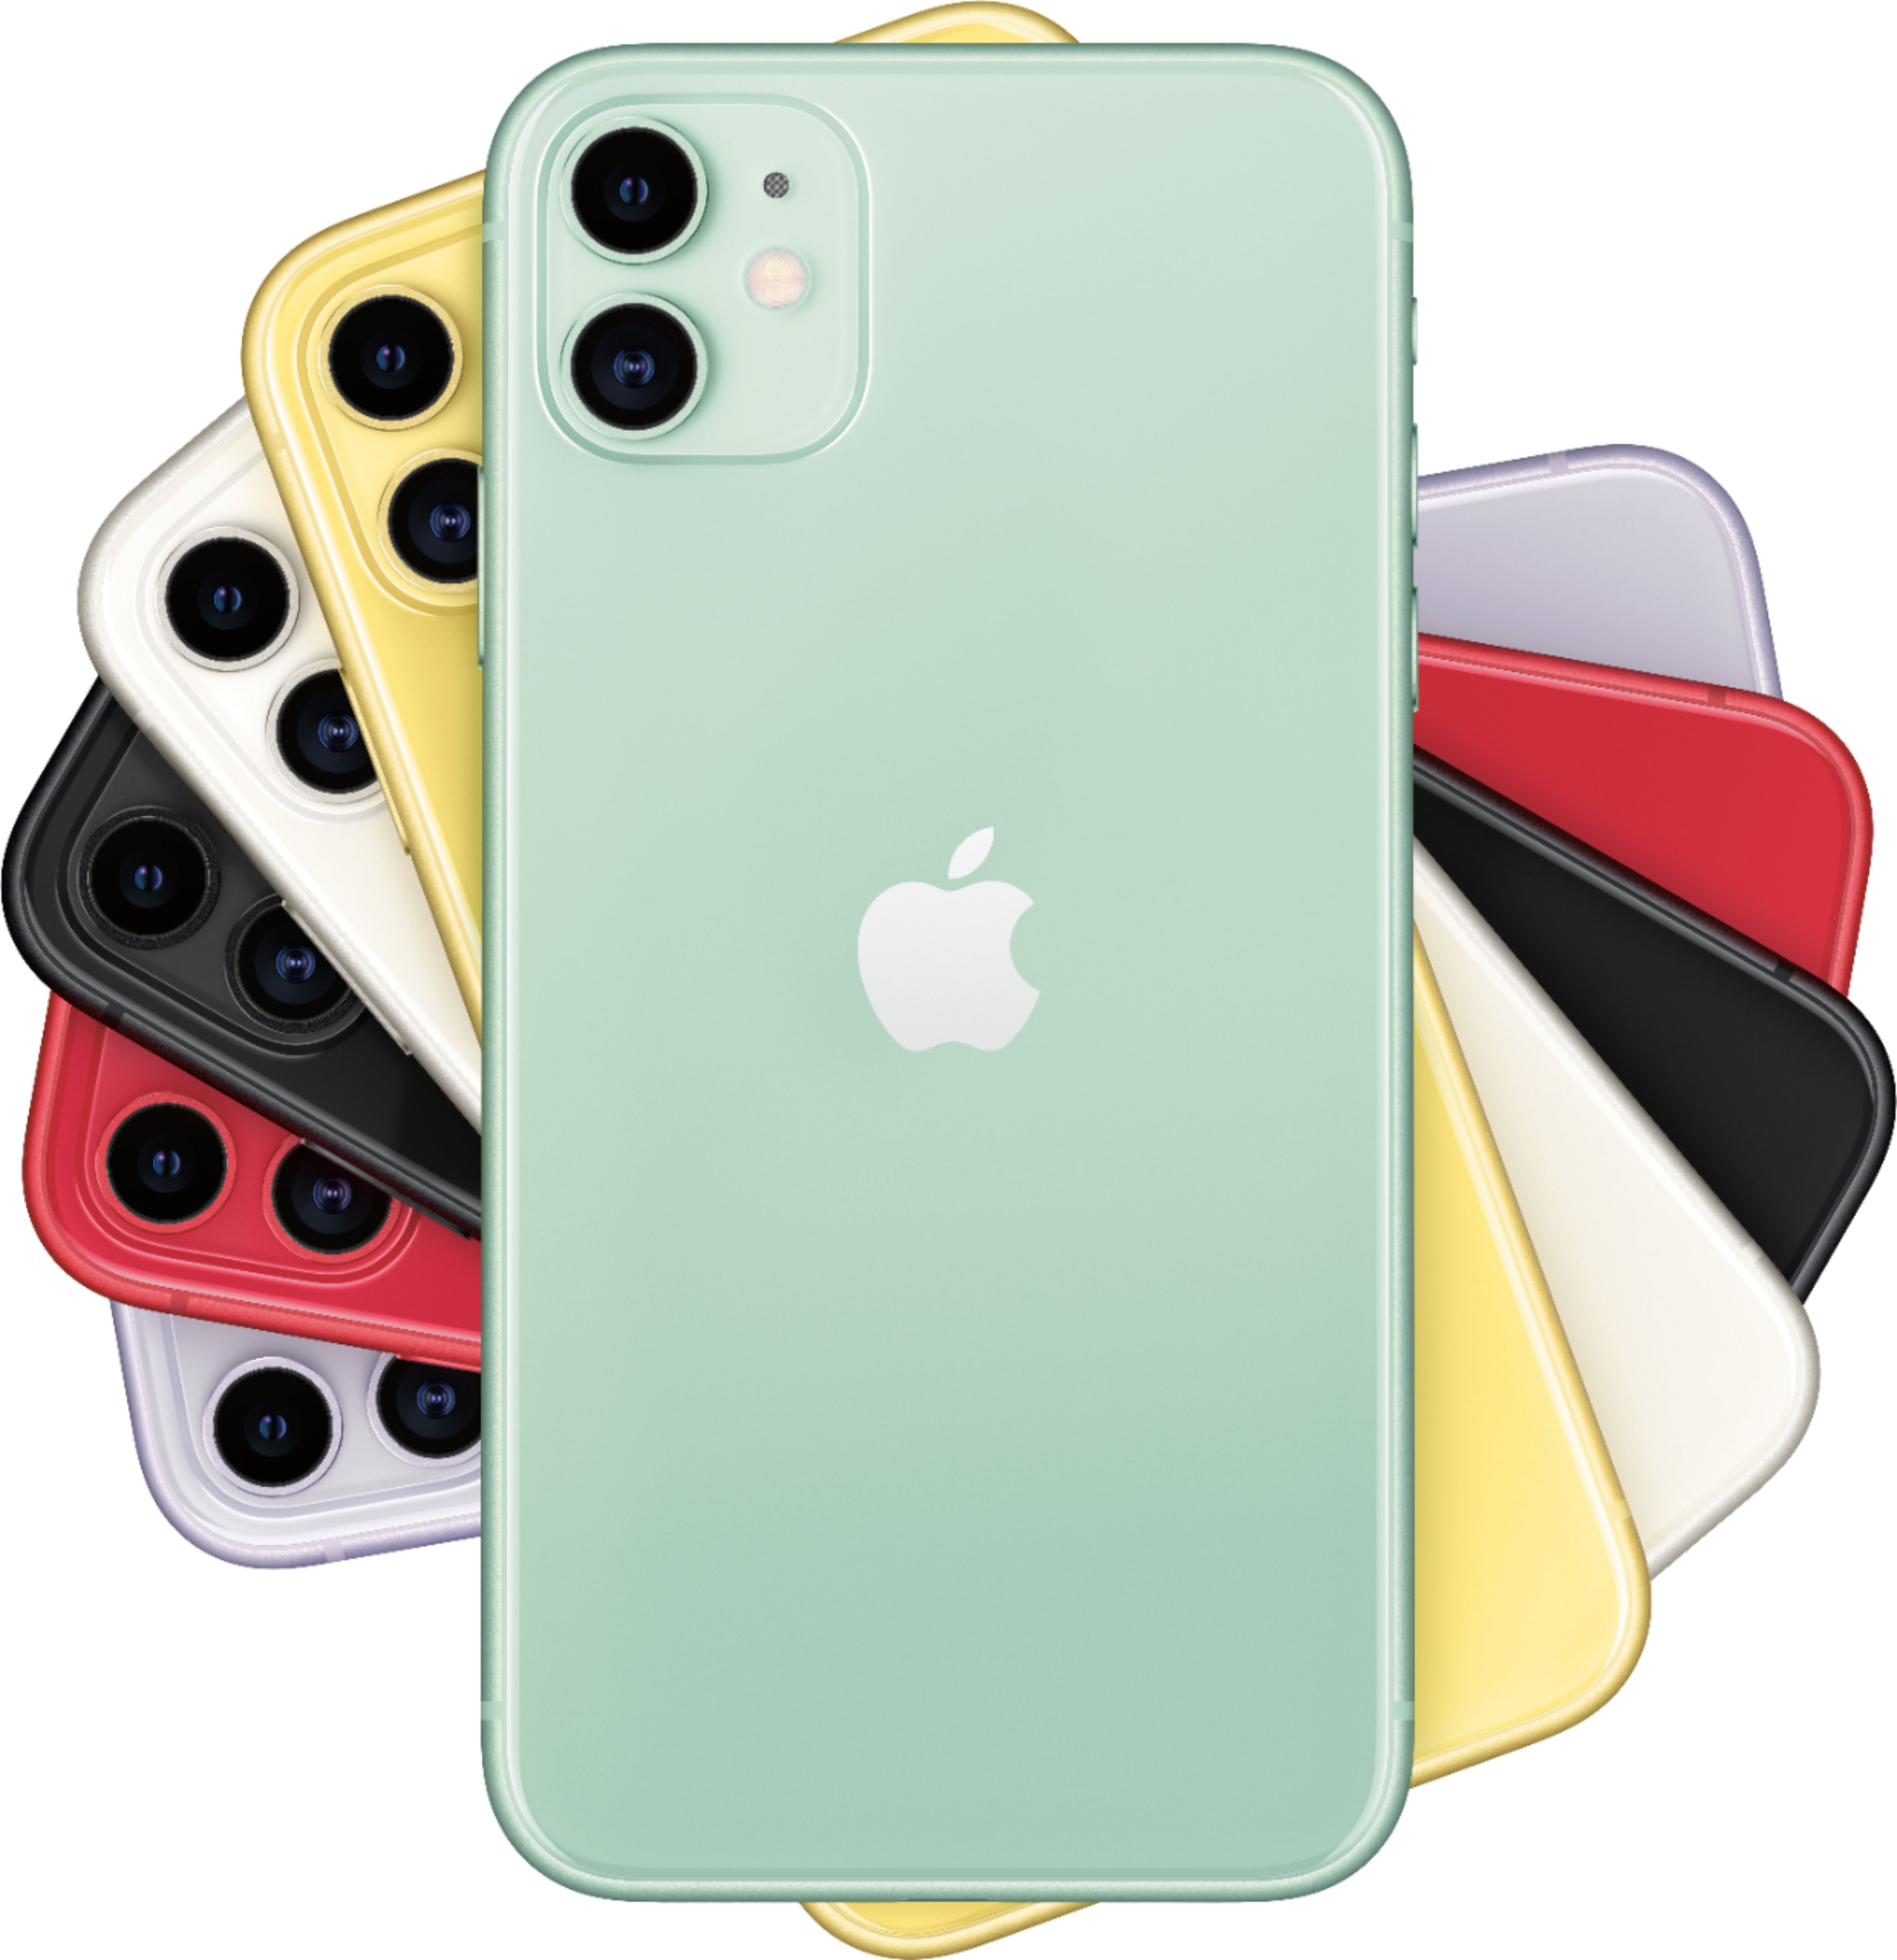 Apple iPhone 11 64GB Green (Sprint) MWLD2LL/A - Best Buy